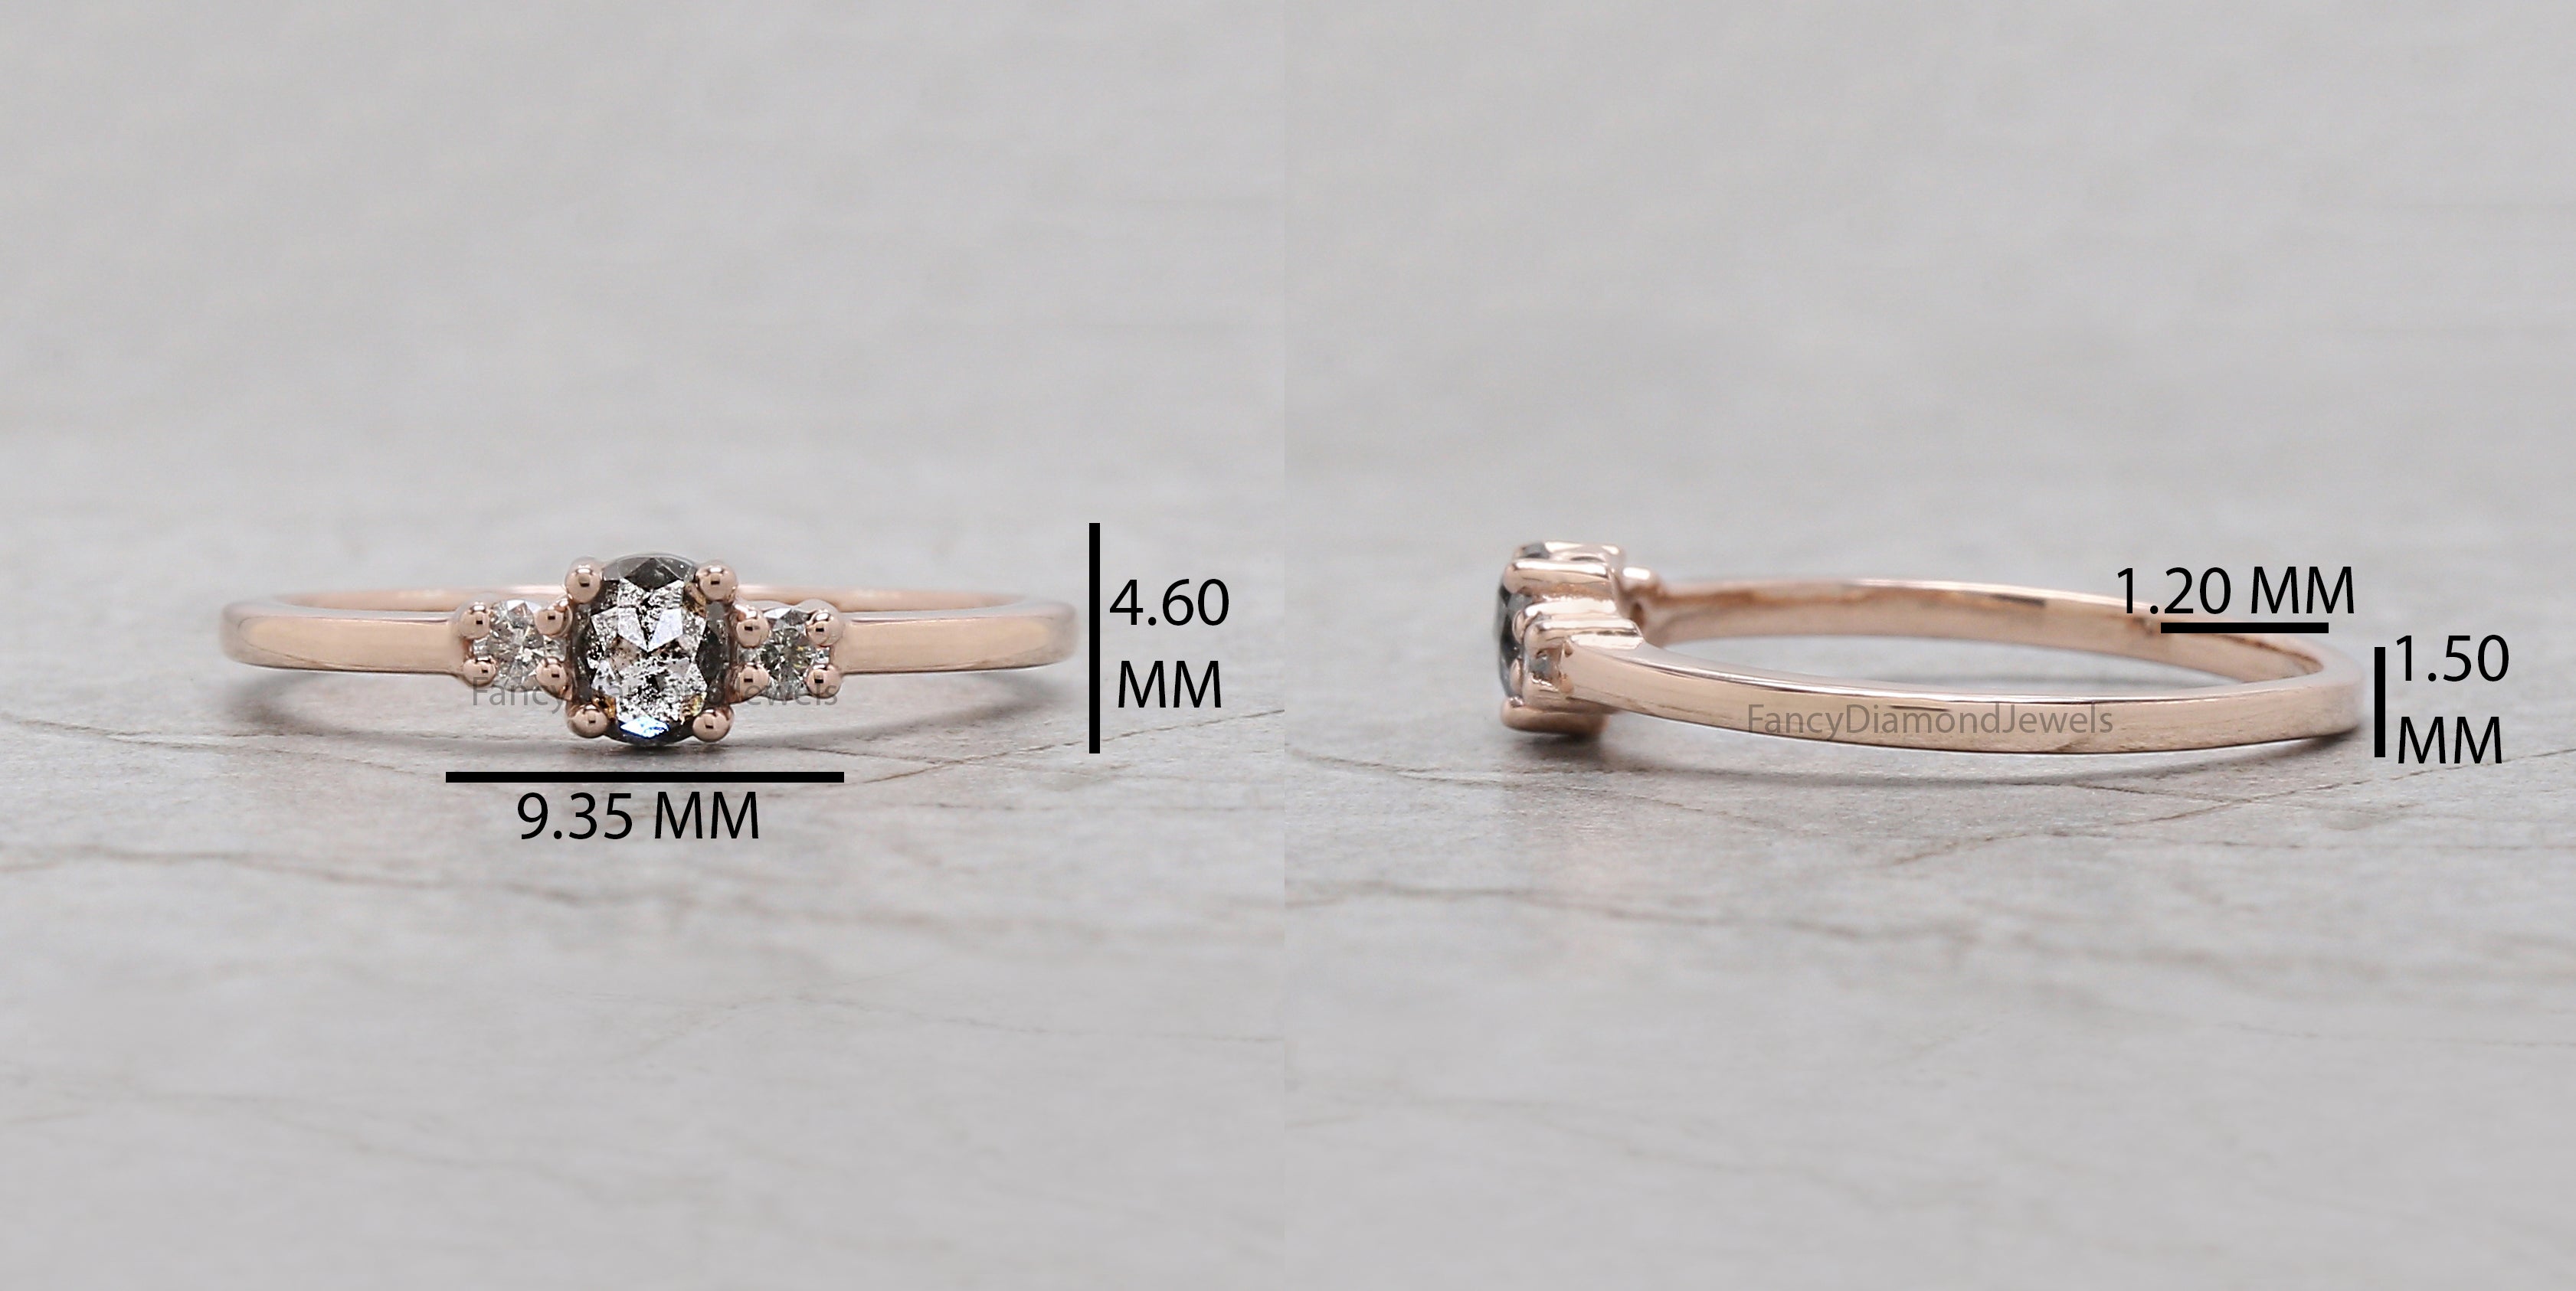 Oval Salt And Pepper Diamond Ring, Salt And Pepper Oval Diamond Engagement Ring, Oval Diamond Ring, Oval Cut Ring, Oval Shape Ring, KD1162